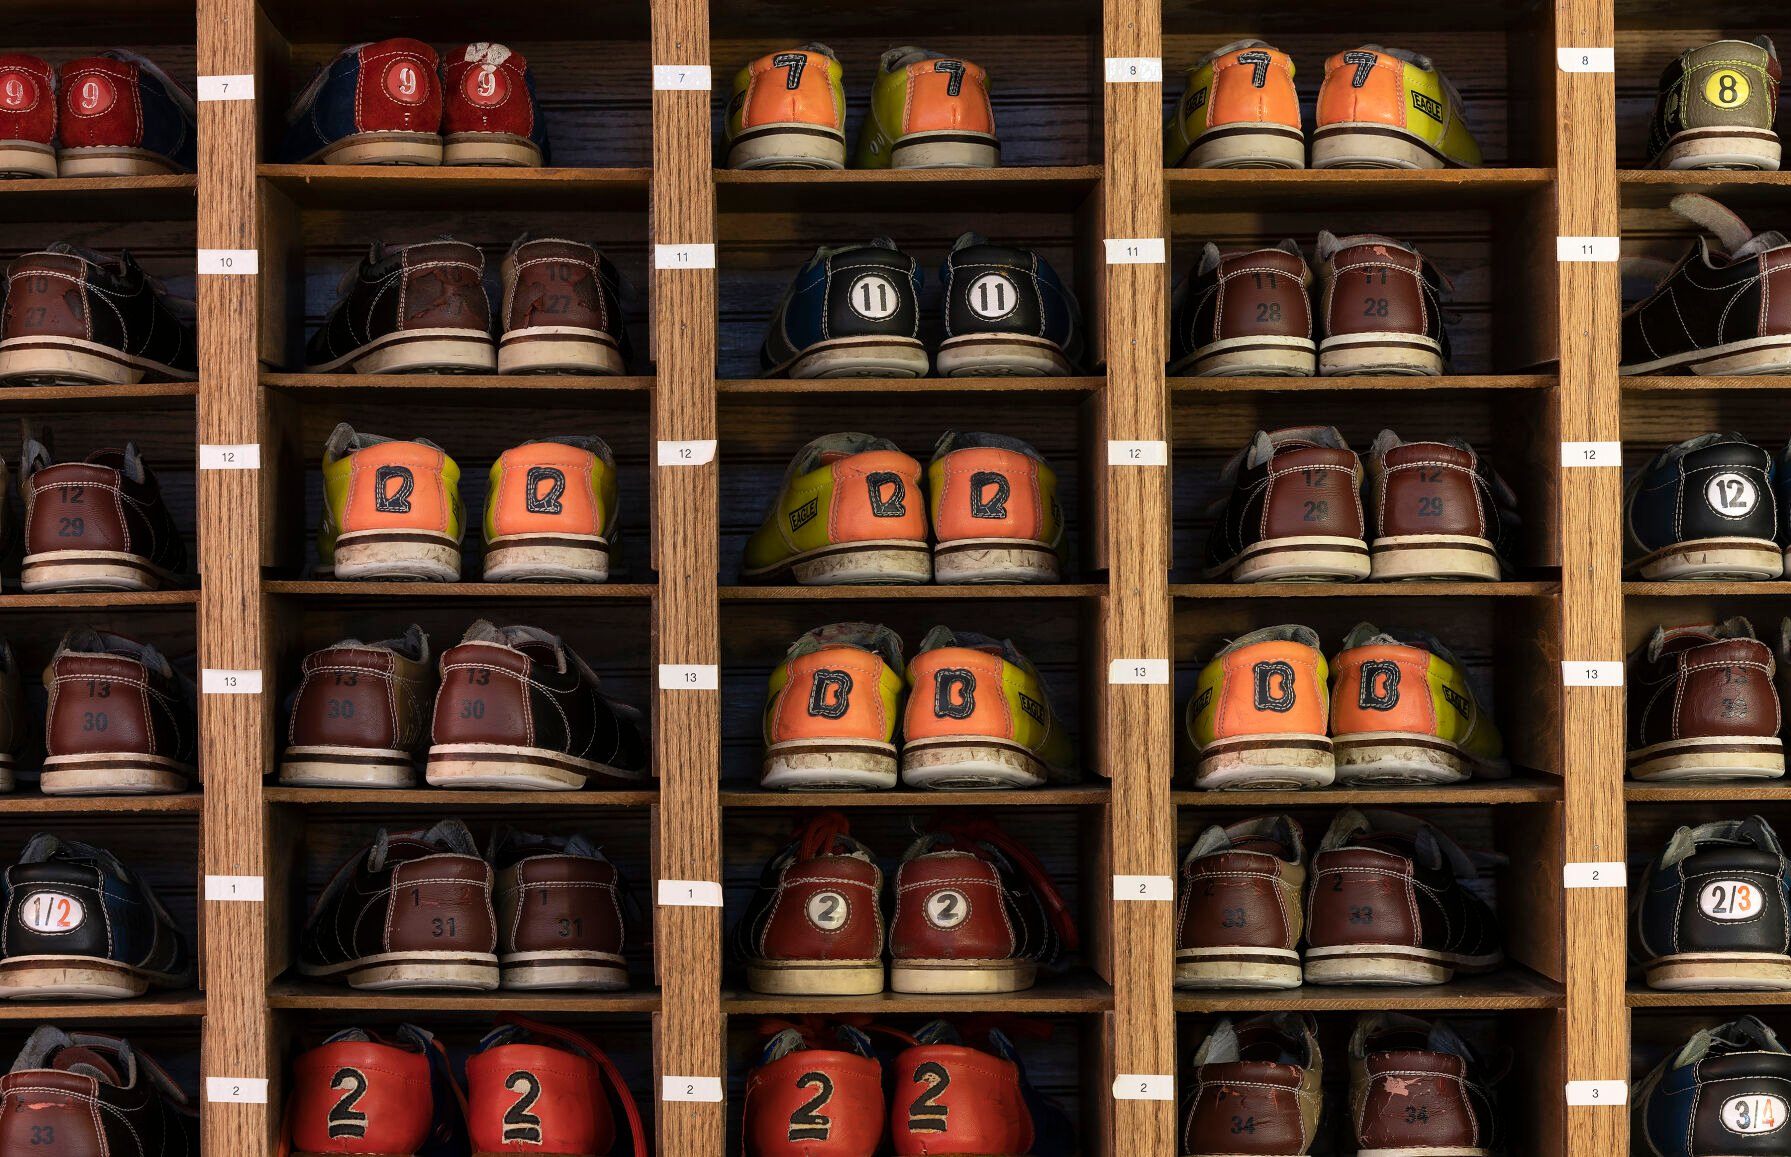 Rental bowling shoes at Fischer Lanes.    PHOTO CREDIT: Stephen Gassman
Telegraph Herald